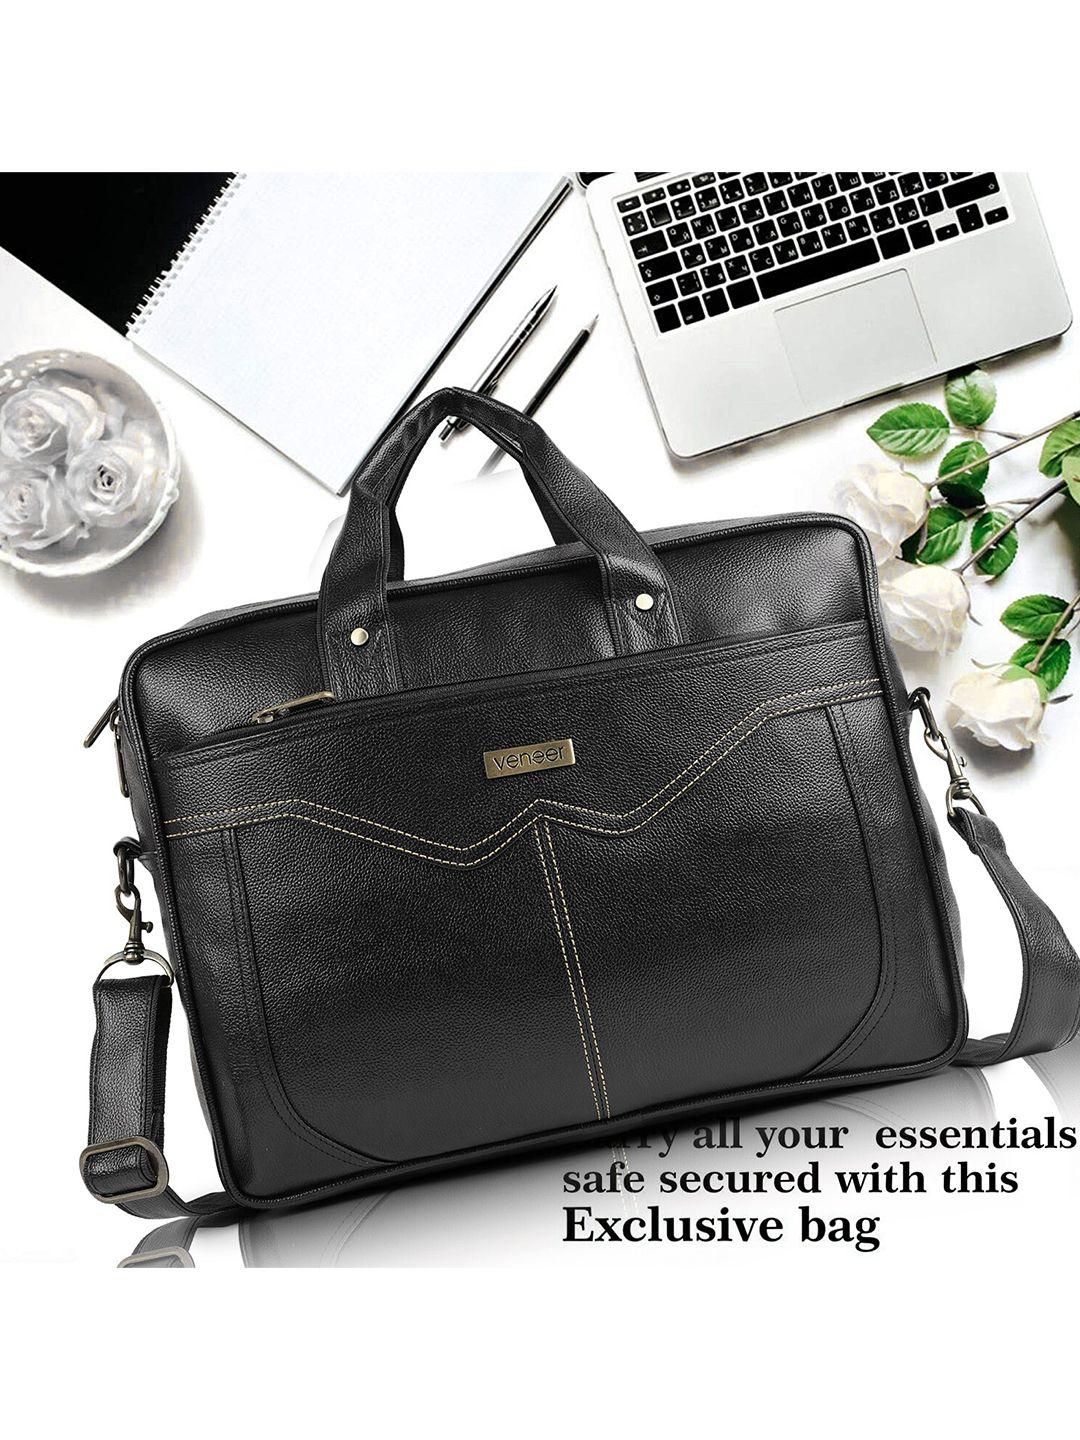 veneer unisex black solid laptop messenger bag